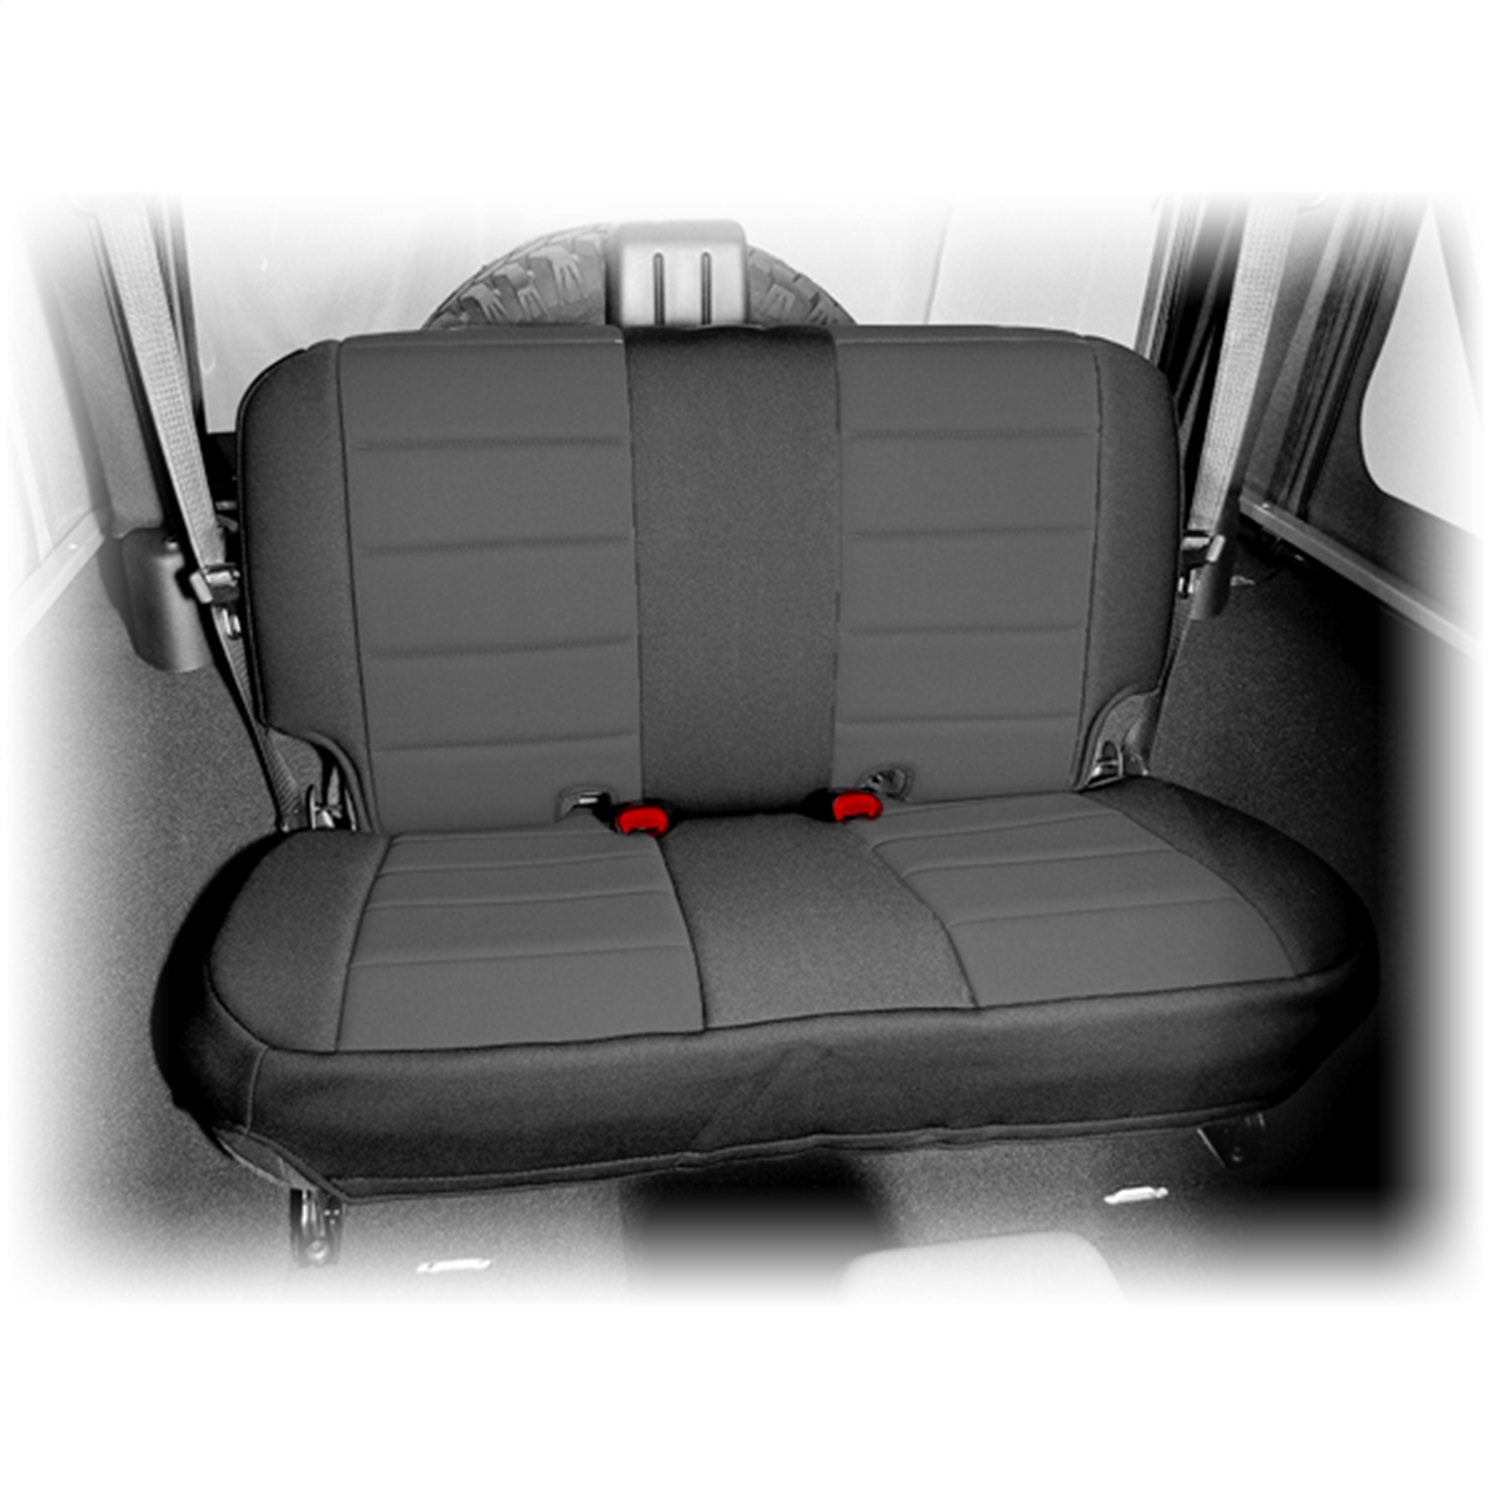 Rugged Ridge 13265.01 Seat Protector Fits 07-18 Wrangler (JK)